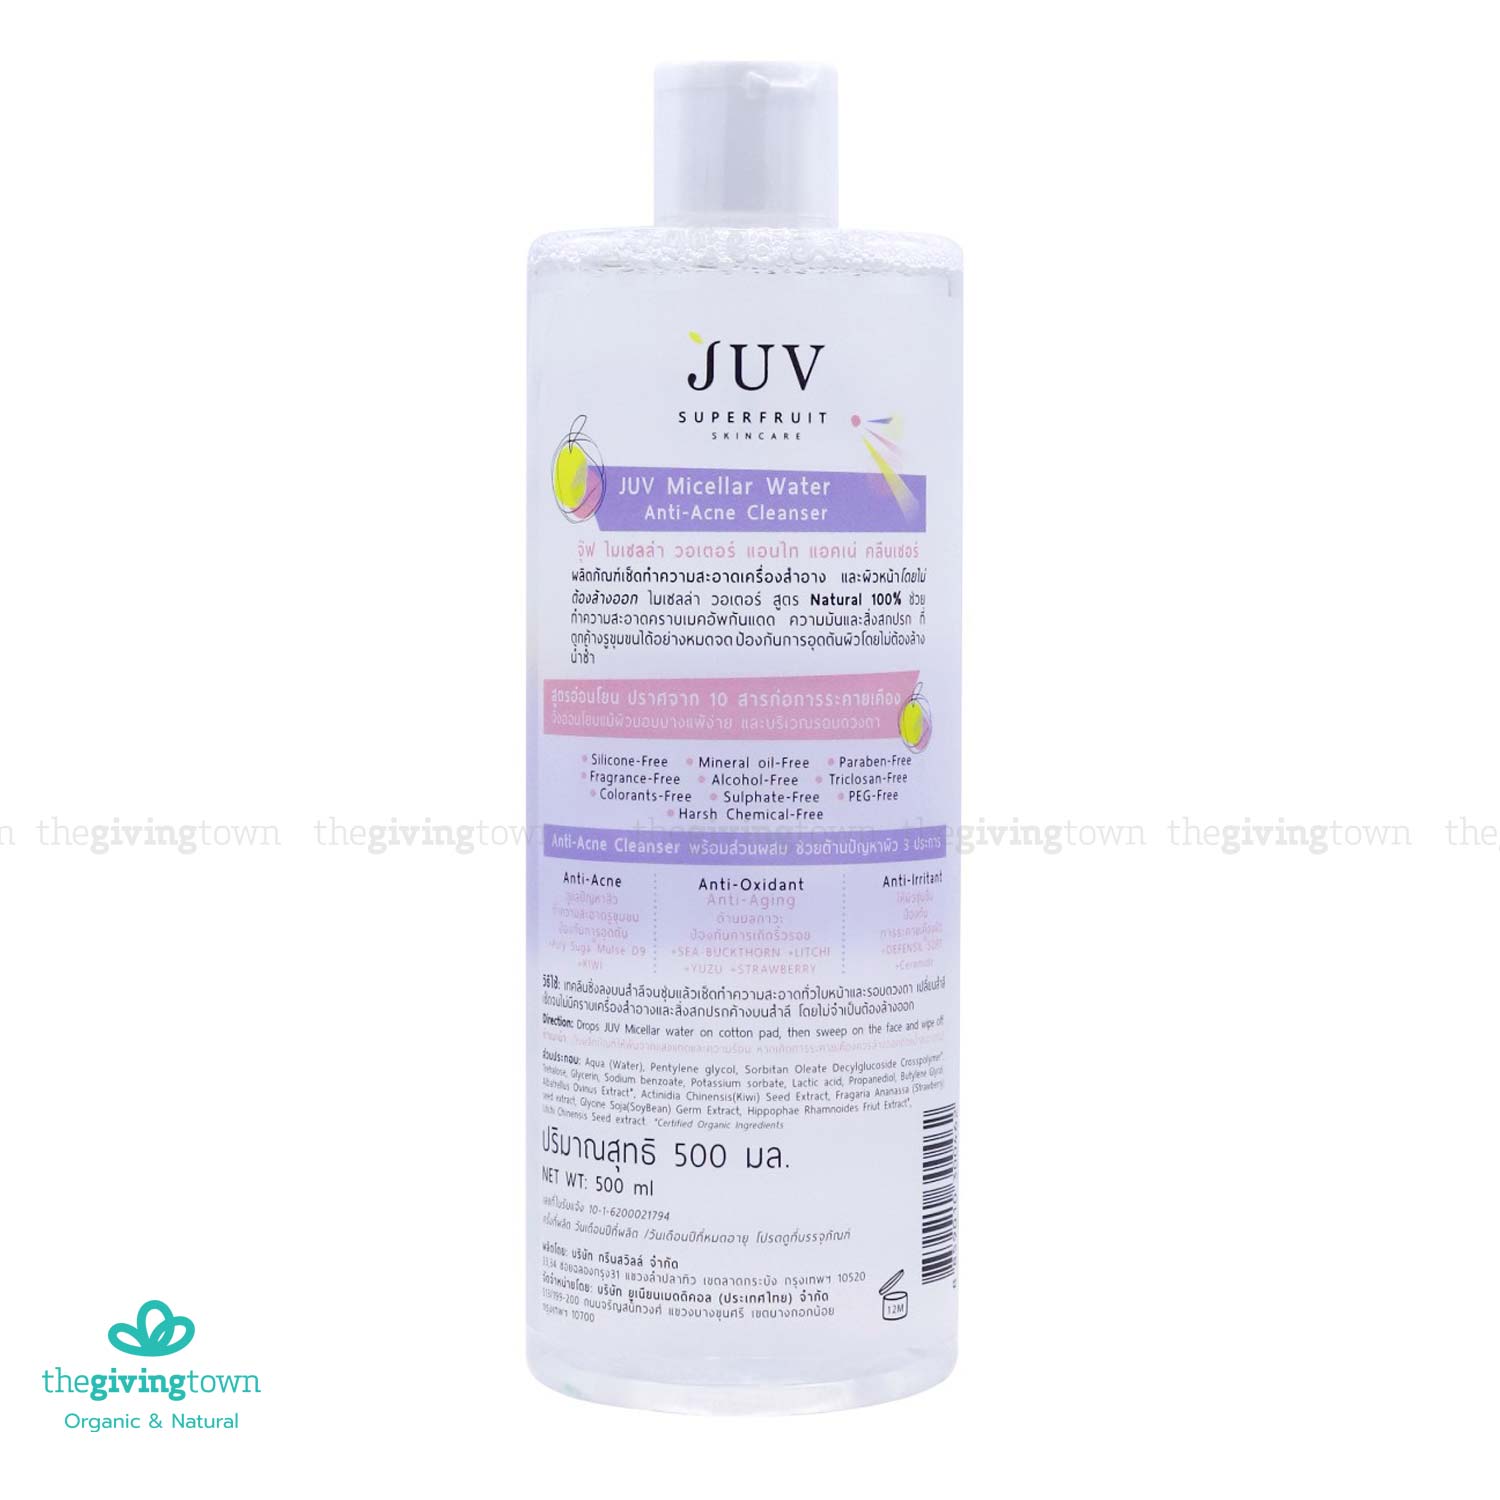 JUV Superfruit Micellar Water Anti-Acne ไมเซลล่า วอเตอร์ ผลิตภัณฑ์เช็ดทำความสะอาดเครื่องสำอางและผิวหน้า ไมเซลล่าวอเตอร์ สูตร Natural 100% JUV Micella ไมเซล่า  กลิ่น Not Specifiedปริมาณ (มล.) 80